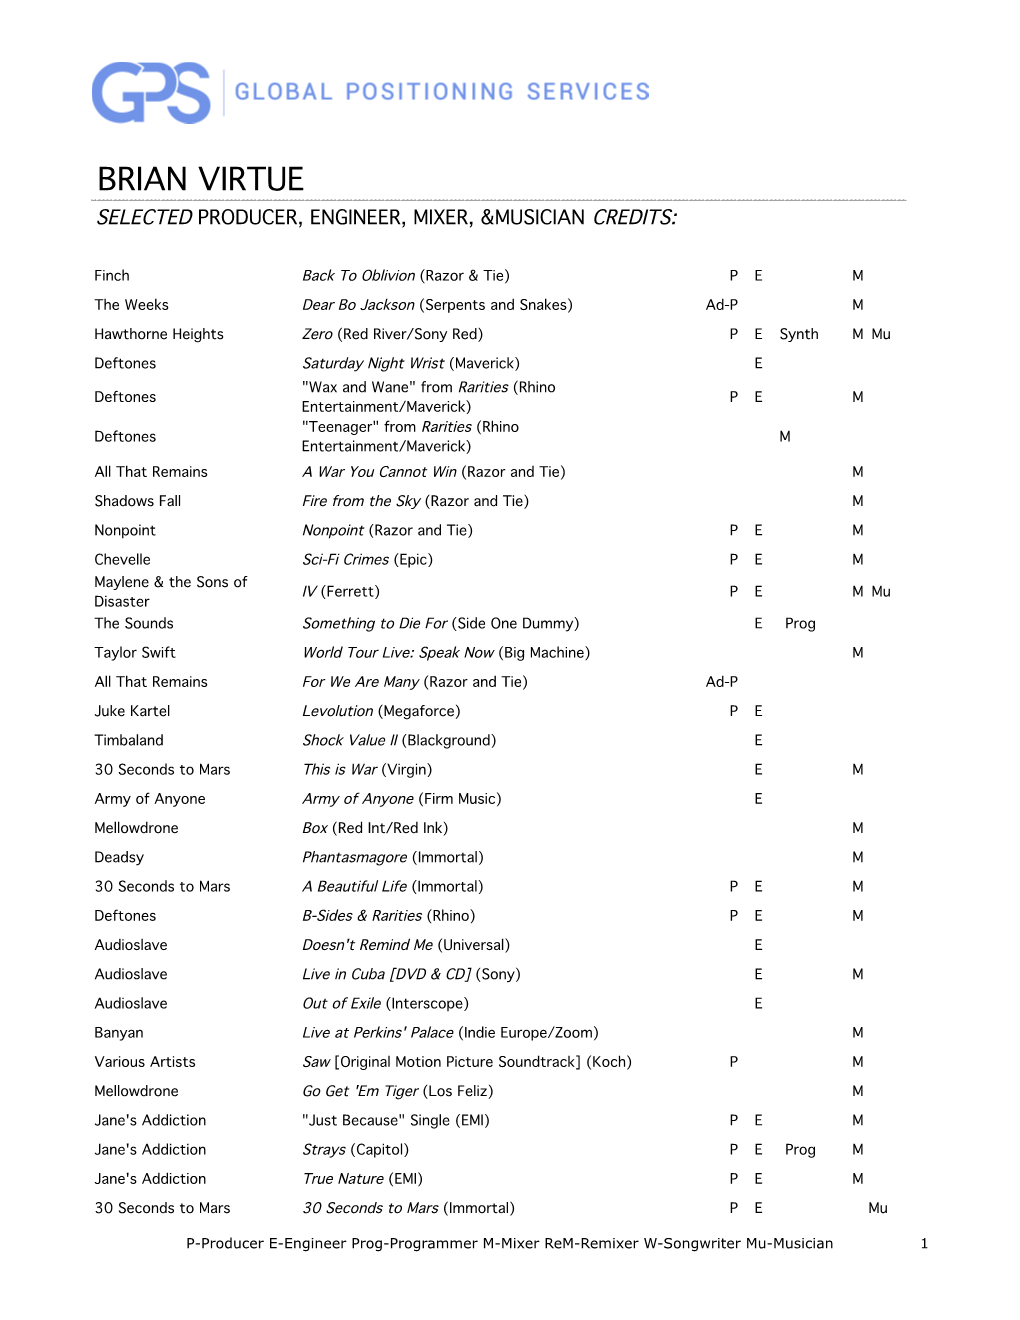 Brian Virtue Selected Producer, Engineer, Mixer, &Musician Credits